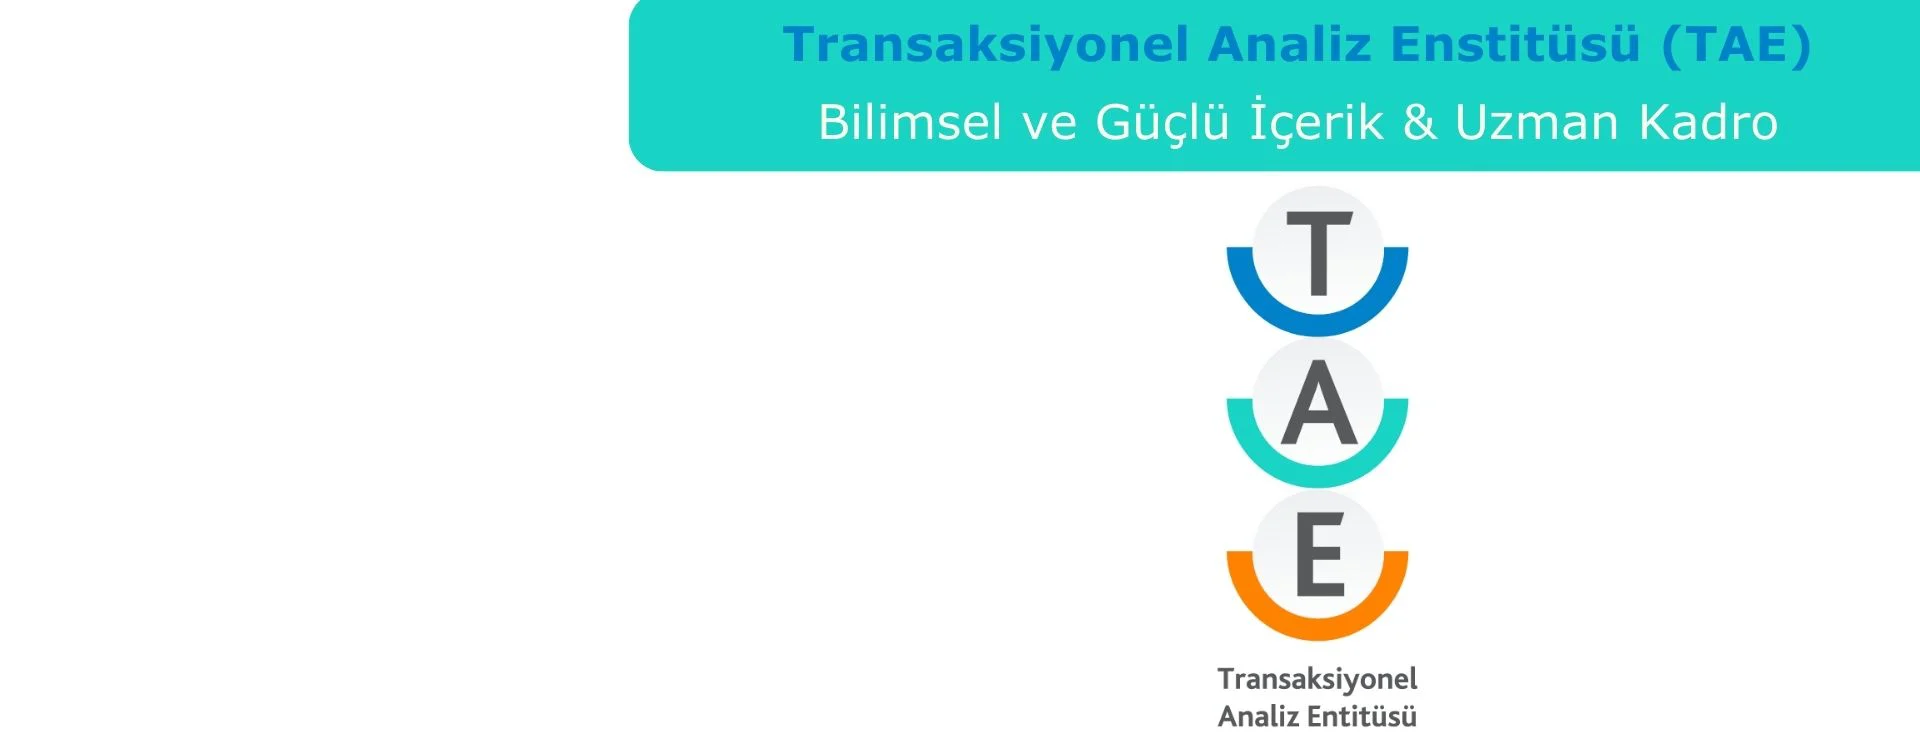 Transaksiyonel Analiz Enstitüsü